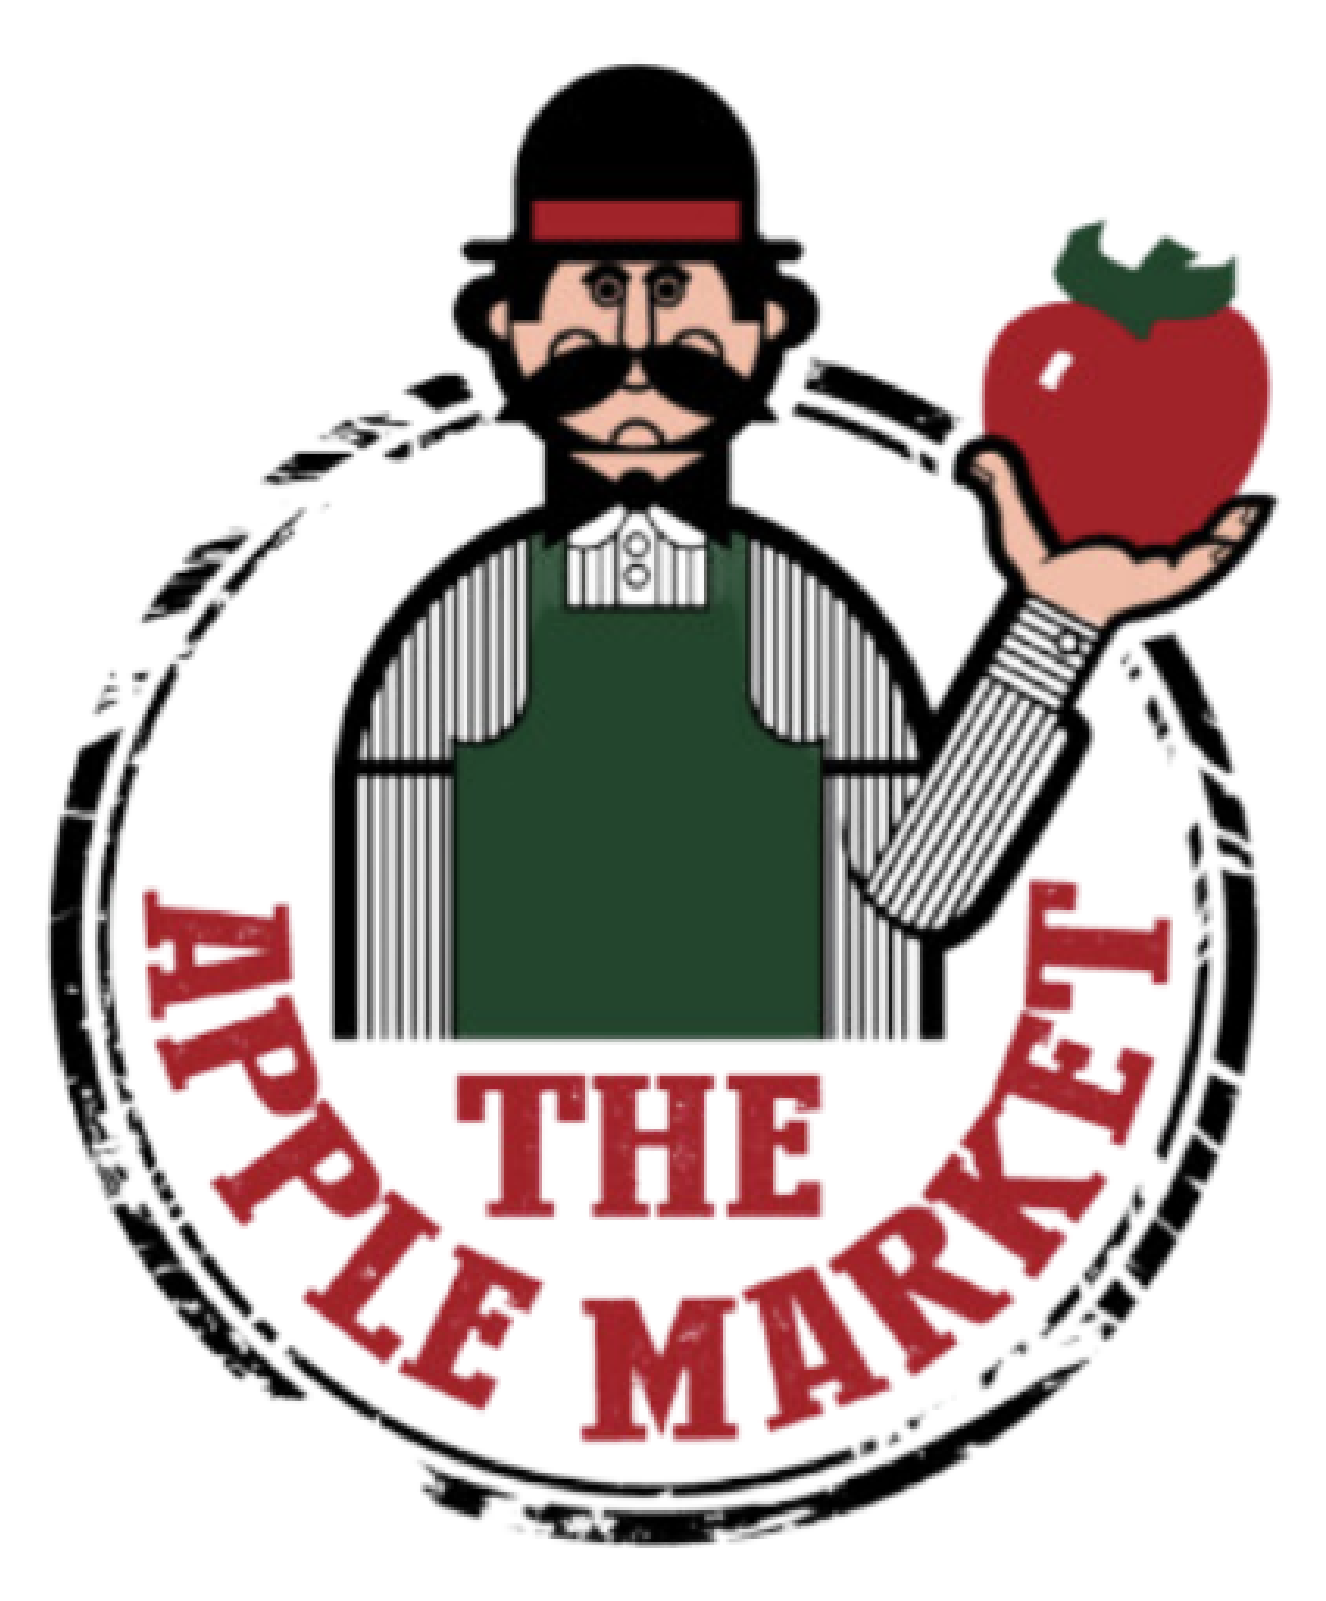 The Applemarket